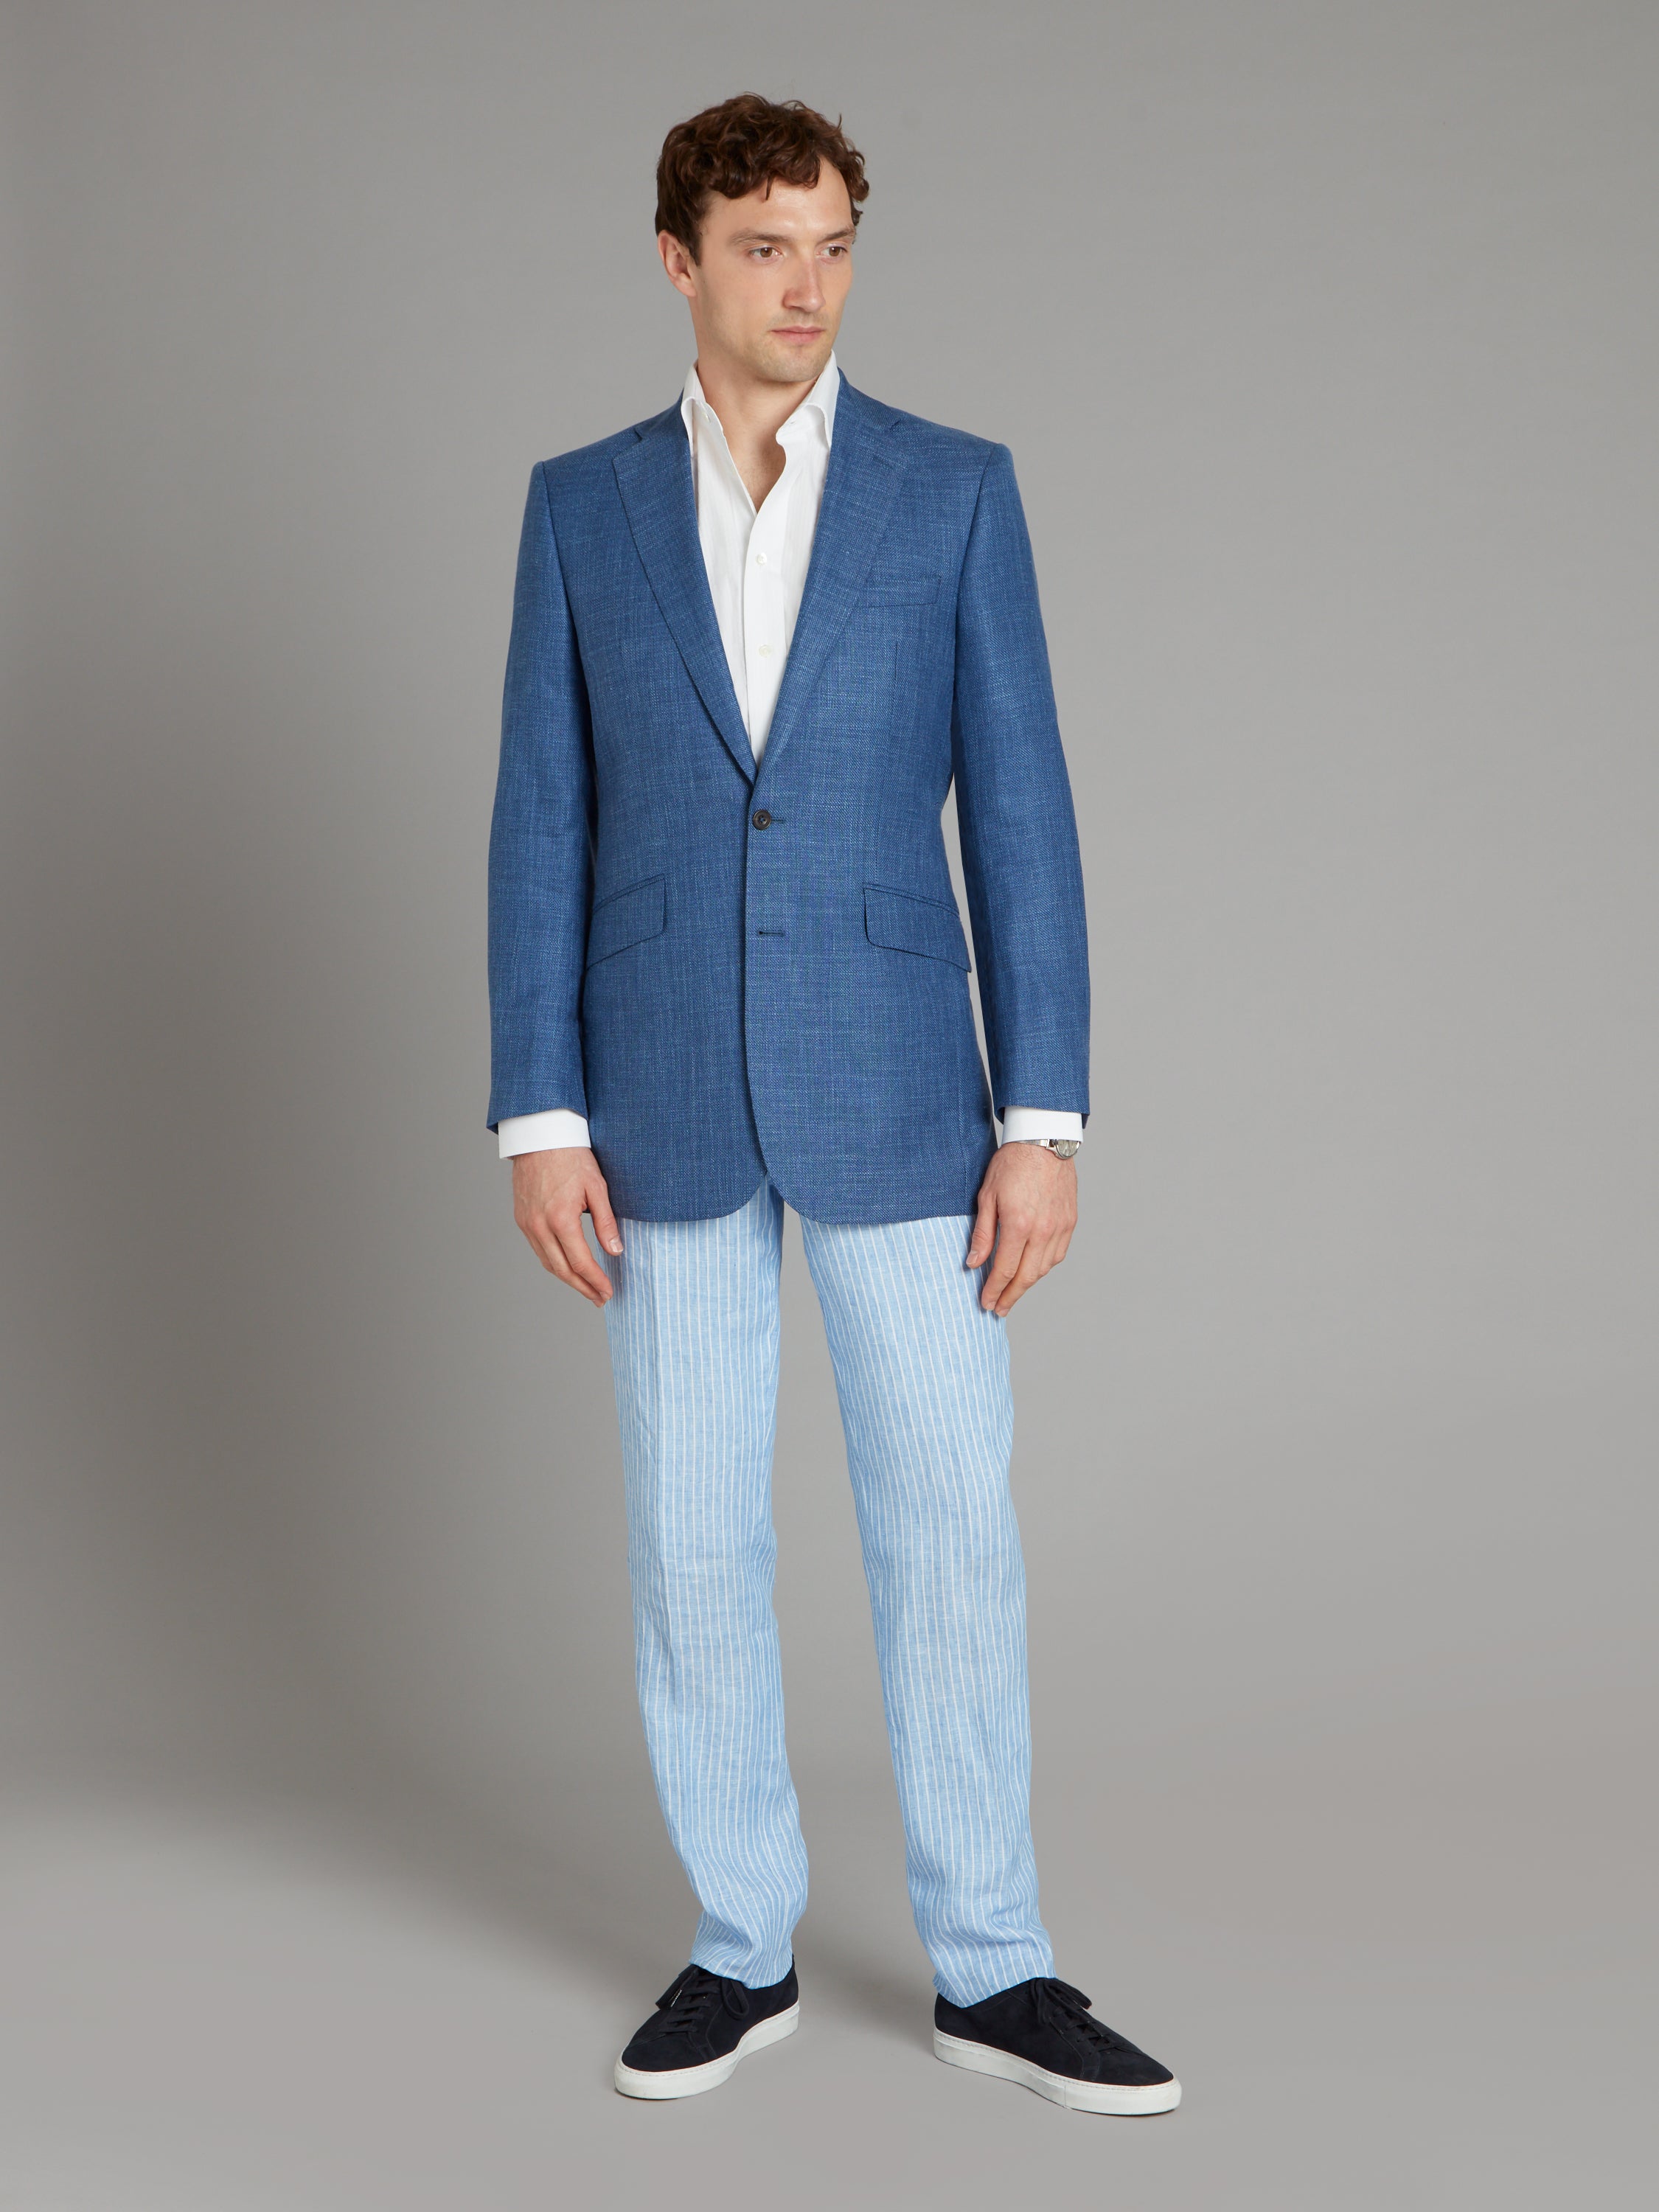 Eaton Men's Jacket | Eaton Jacket - Textured Aegean Blue | Jackets ...